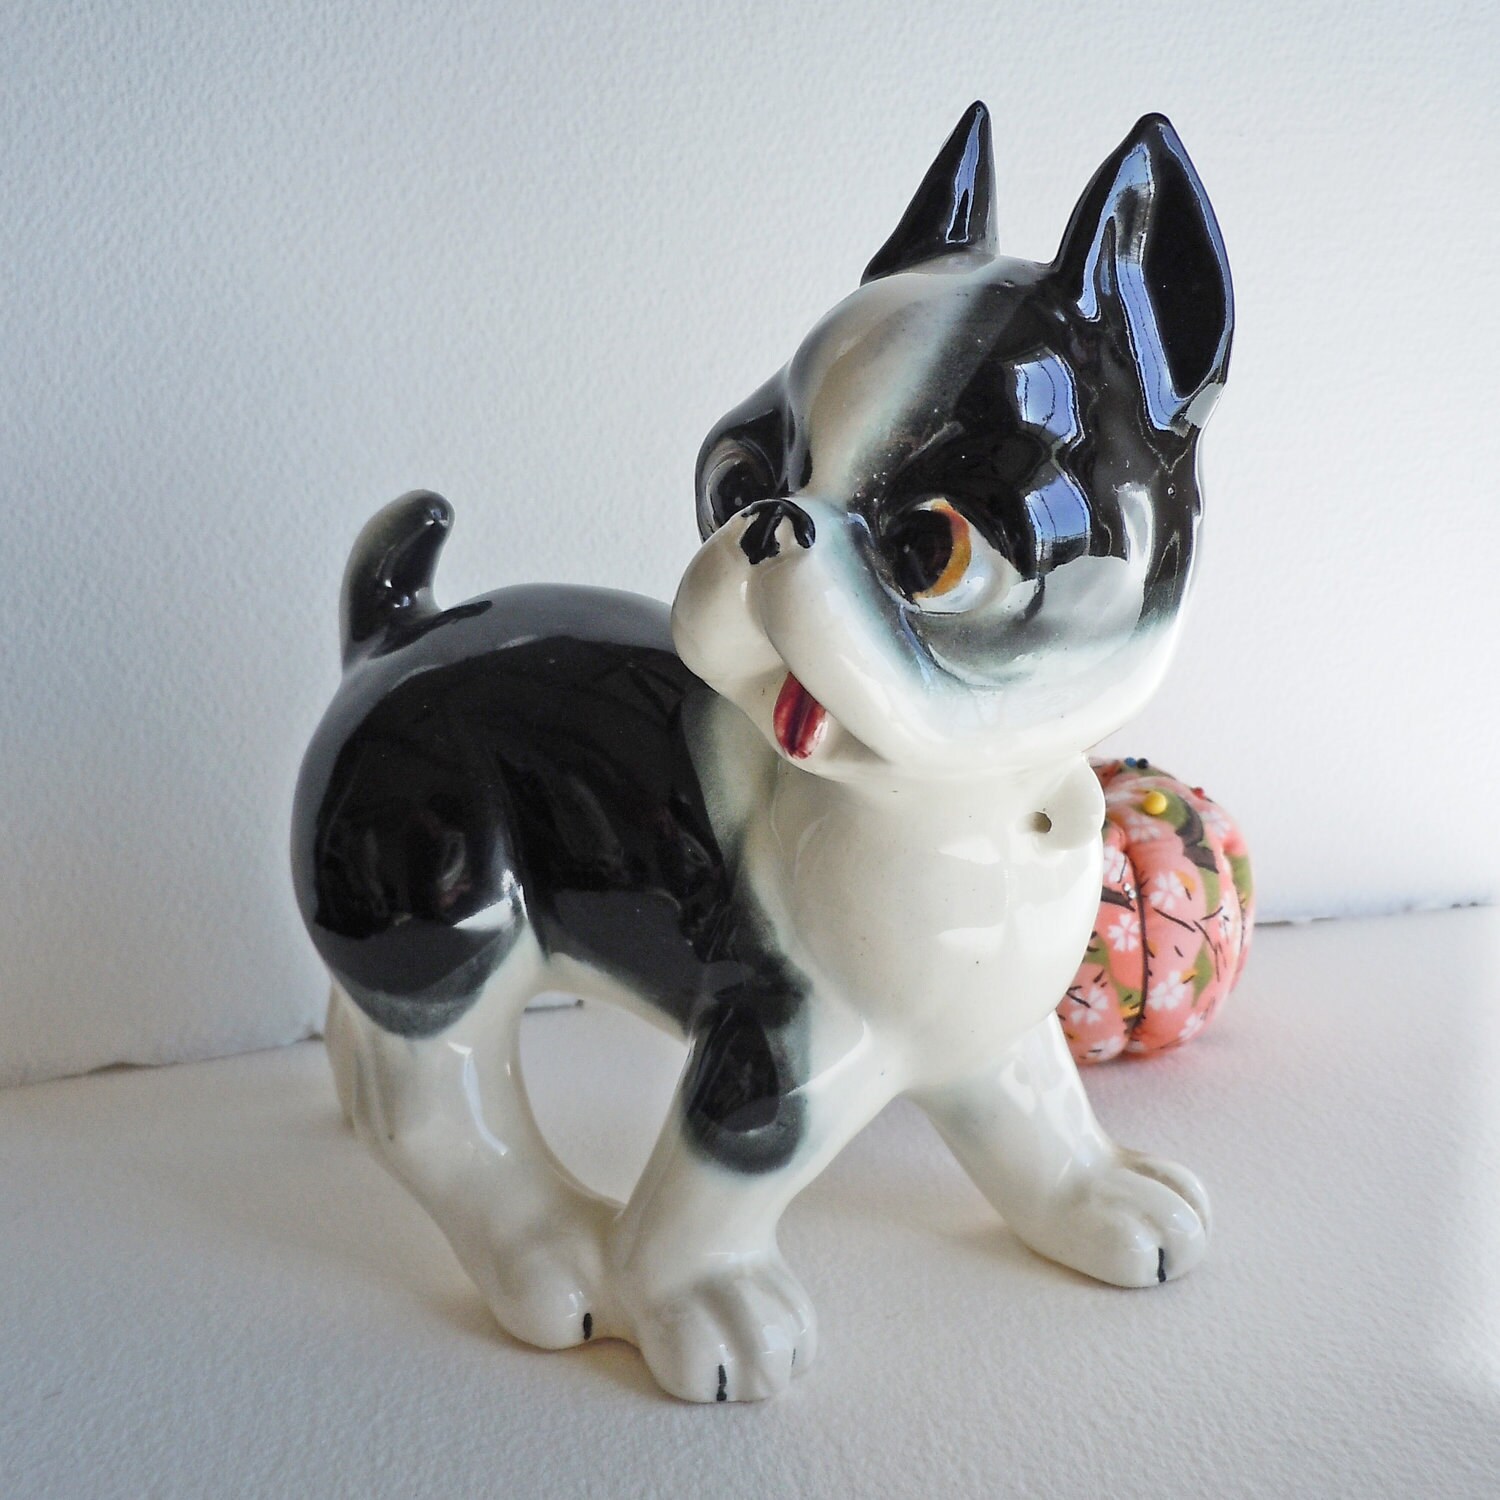 Vintage 1940s Boston Terrier Figurine by Elvin to benefit